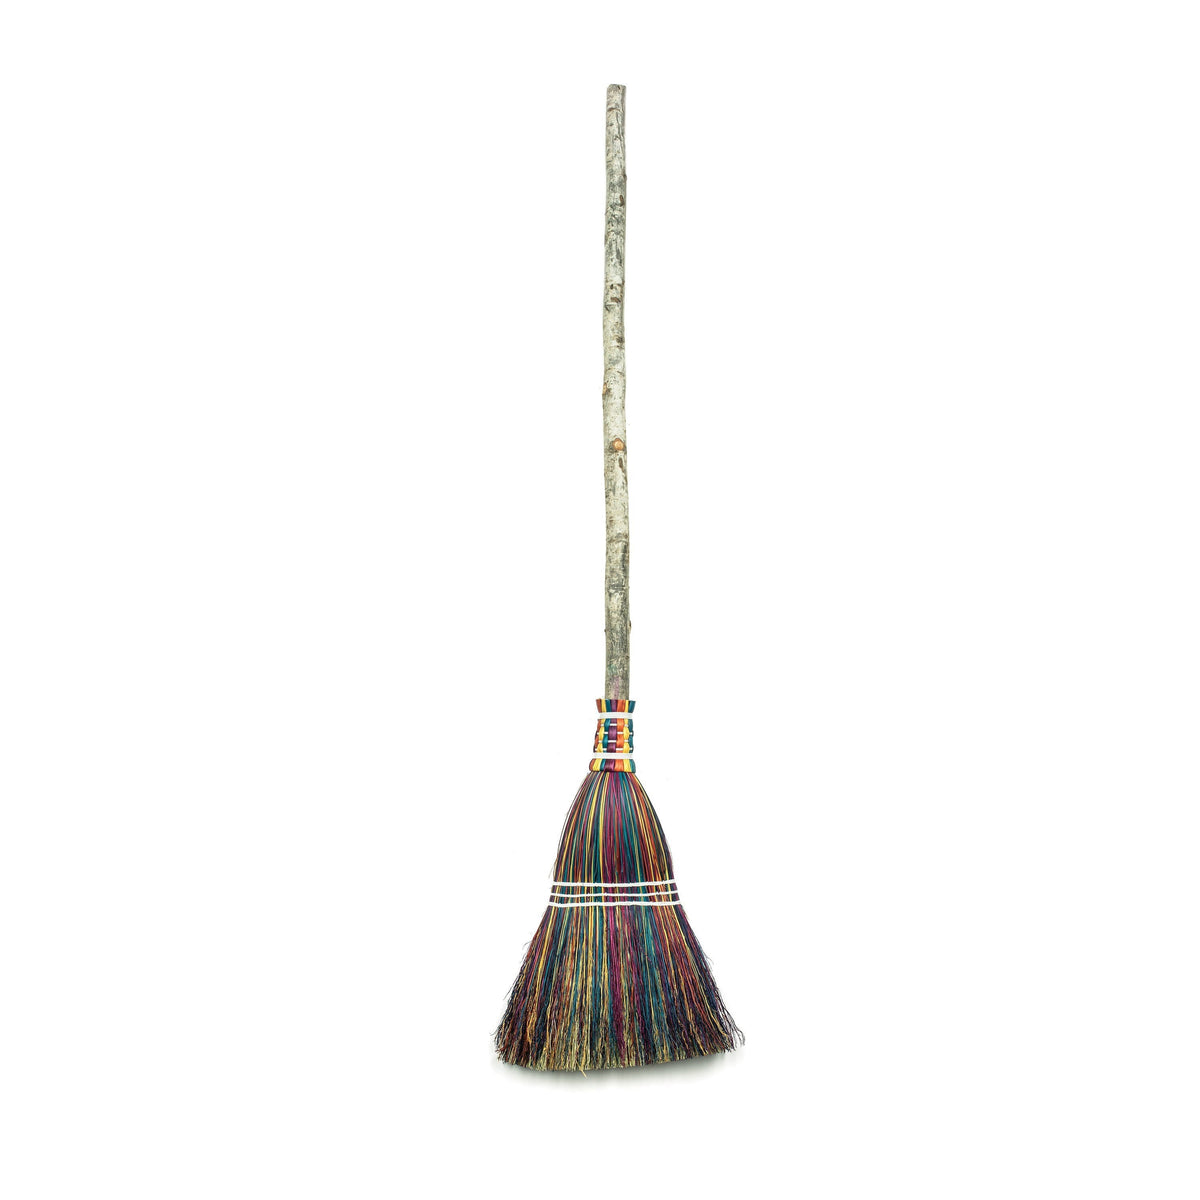 Handmade Broom, House Broom, Country Kitchen Decor, Rainbow